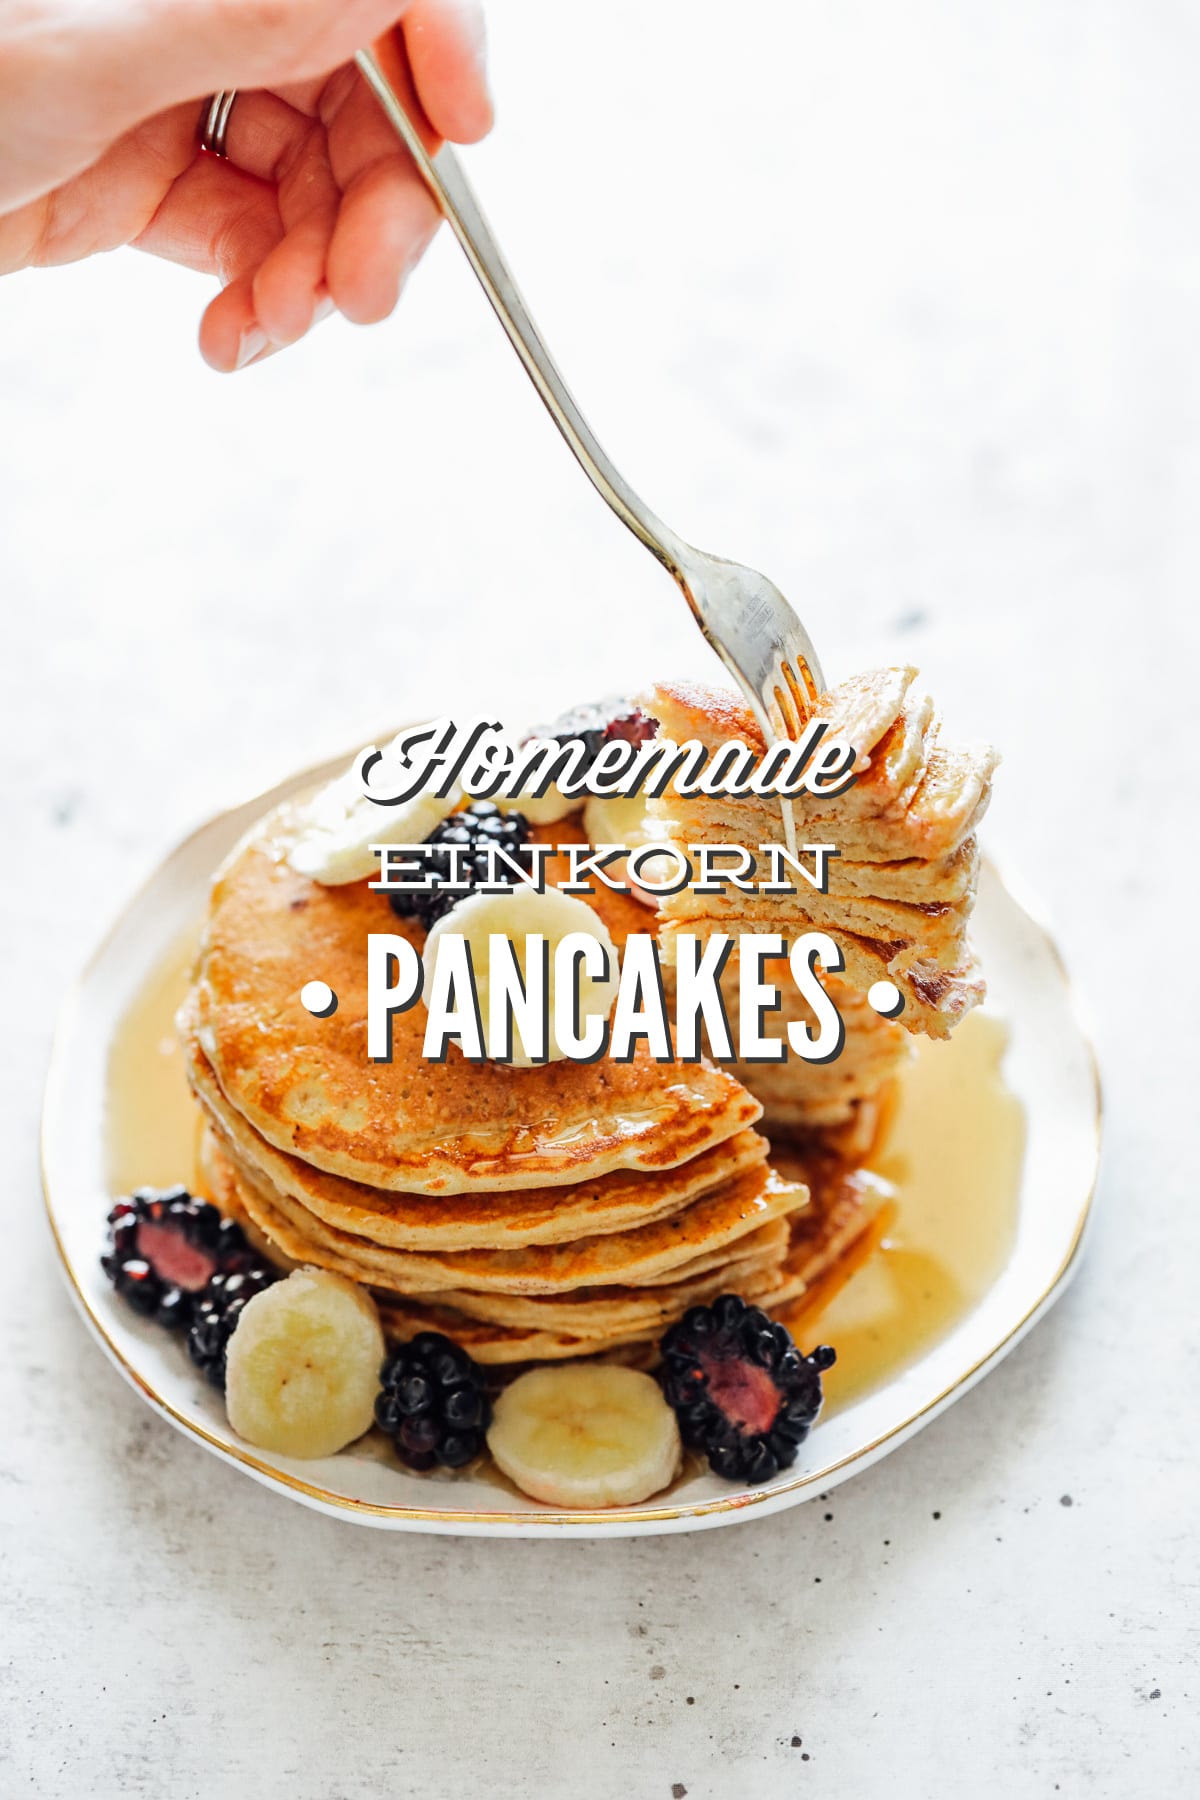 The Best Homemade Einkorn Pancakes